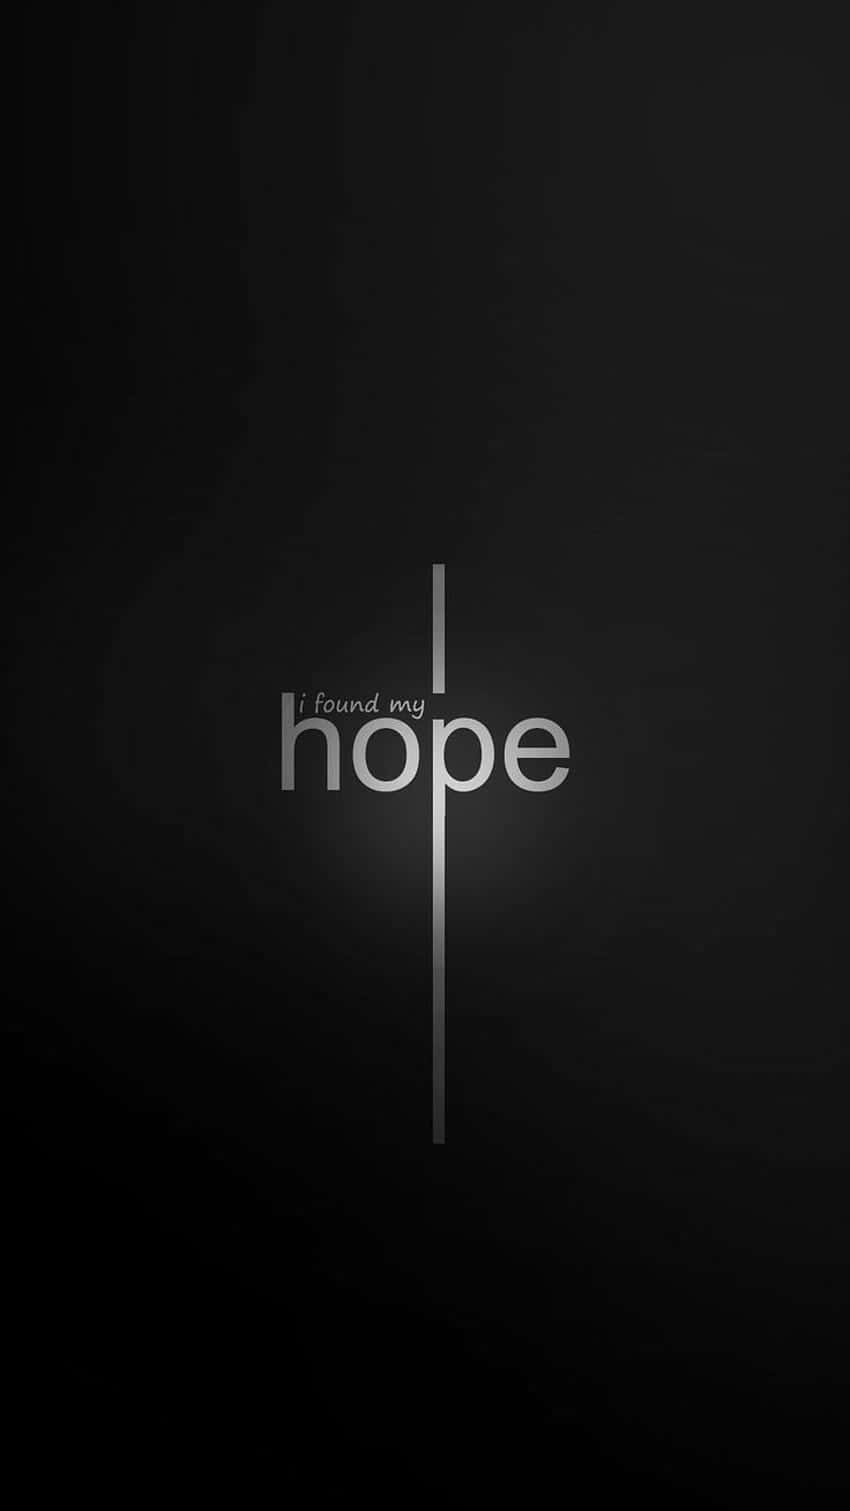 Found My Hope Inspiration Wallpaper